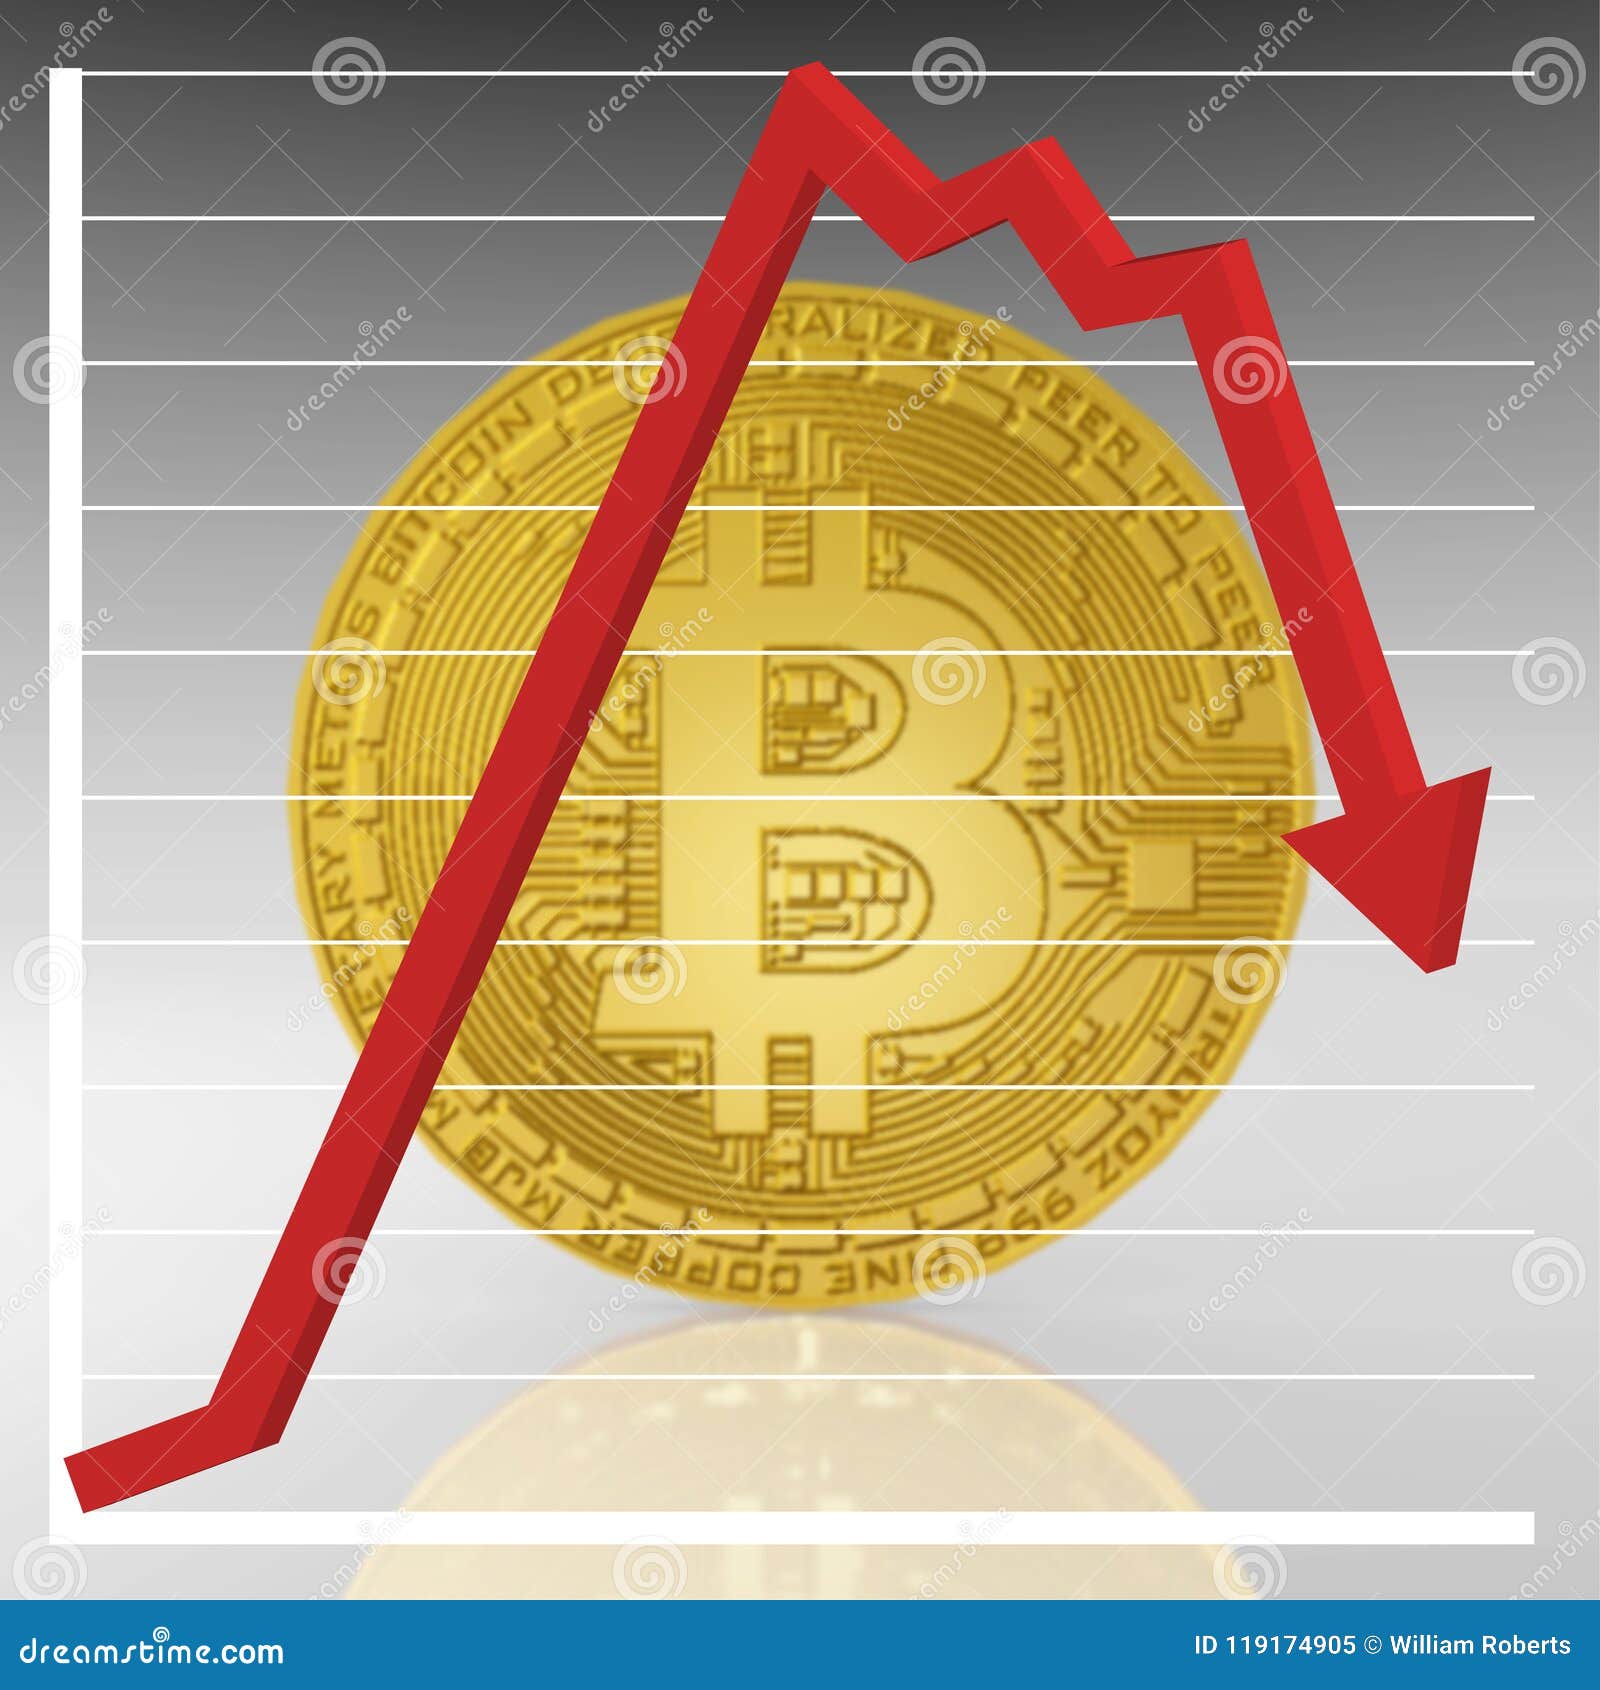 bitcoin loss of value